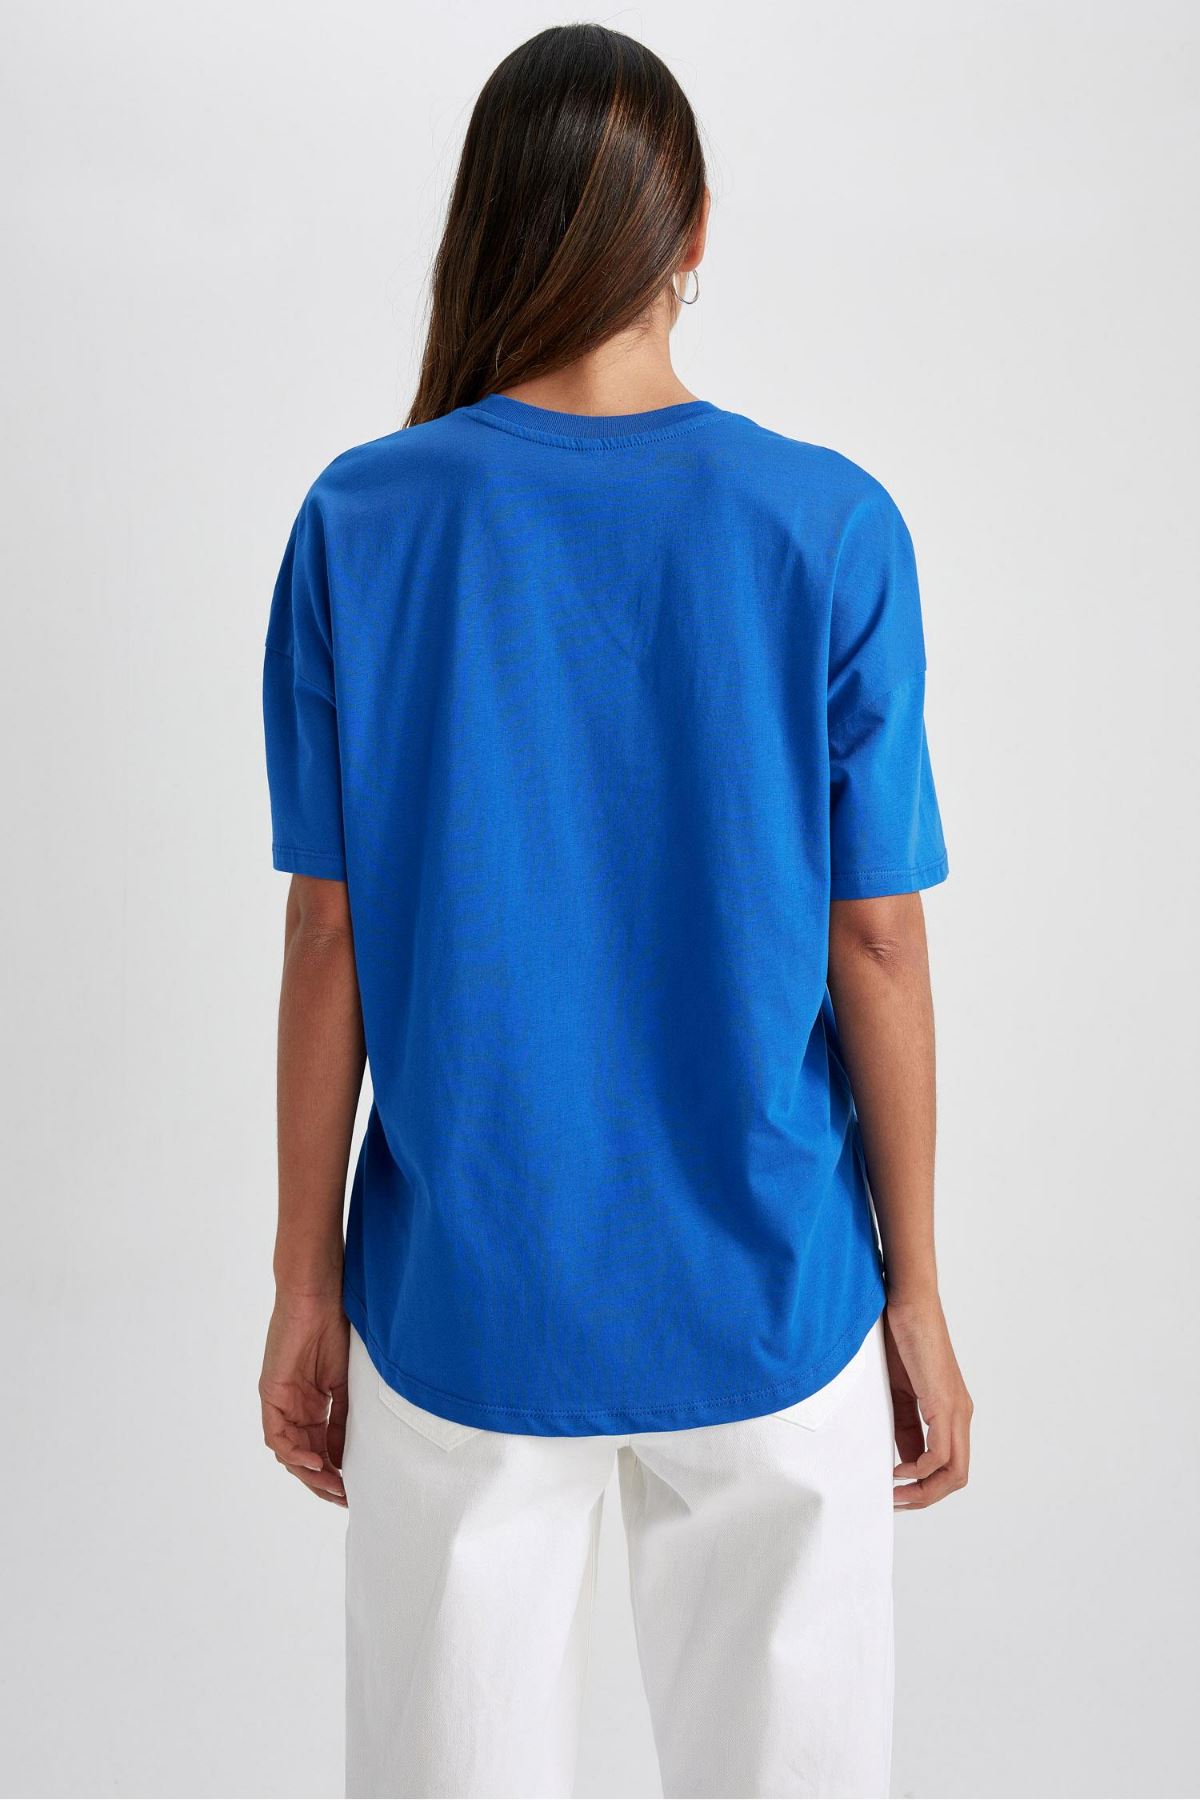 Defacto Kadın Mavi Tişört - W9570AZ/BE399